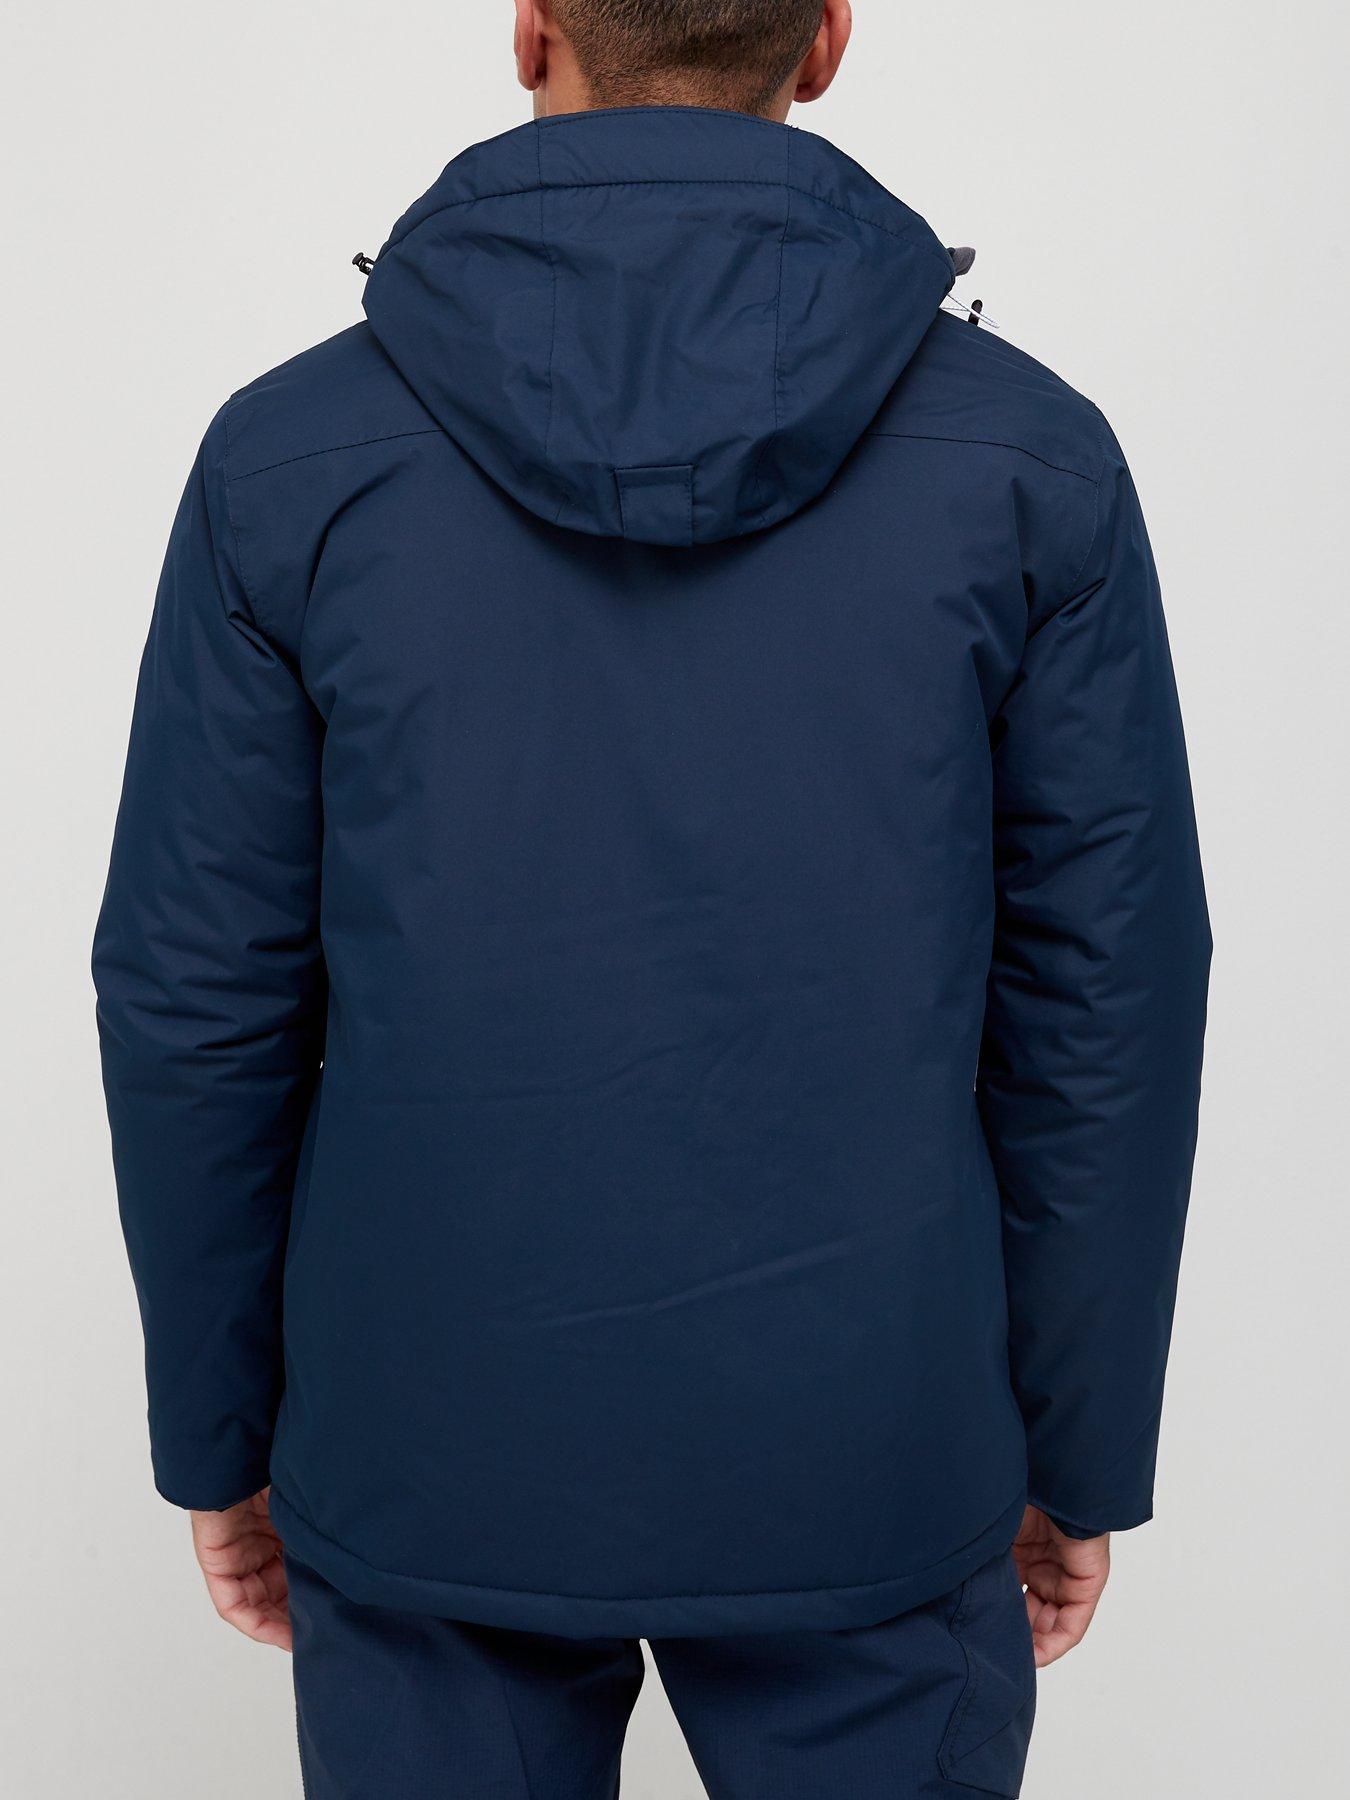  Thornridge Waterproof Insulated Jacket